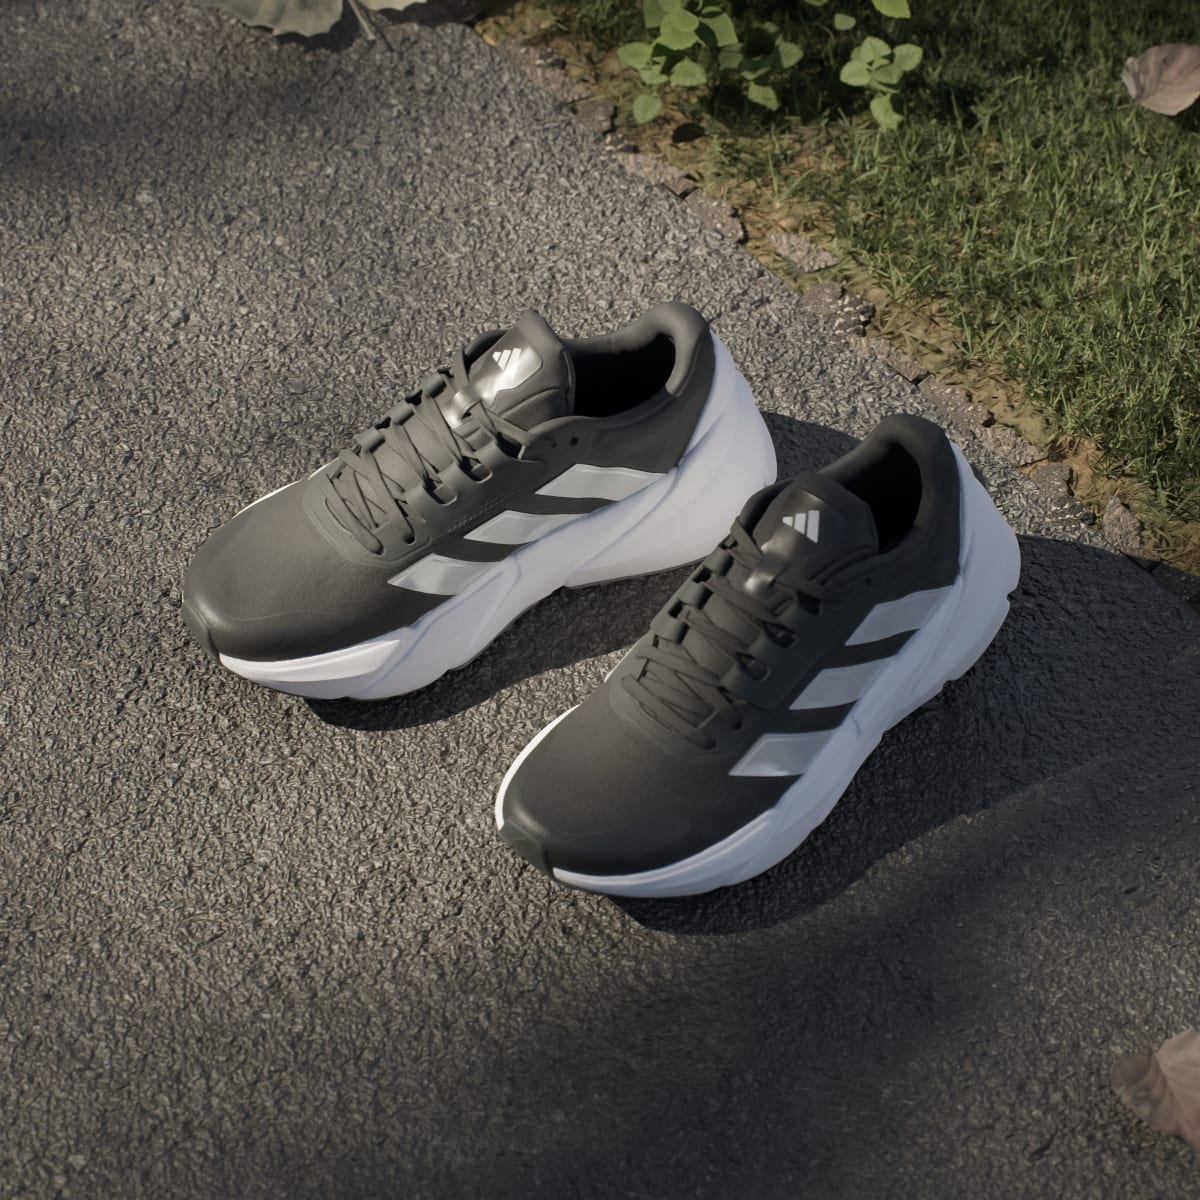 Adidas Adistar 2.0 Running Shoes. 5